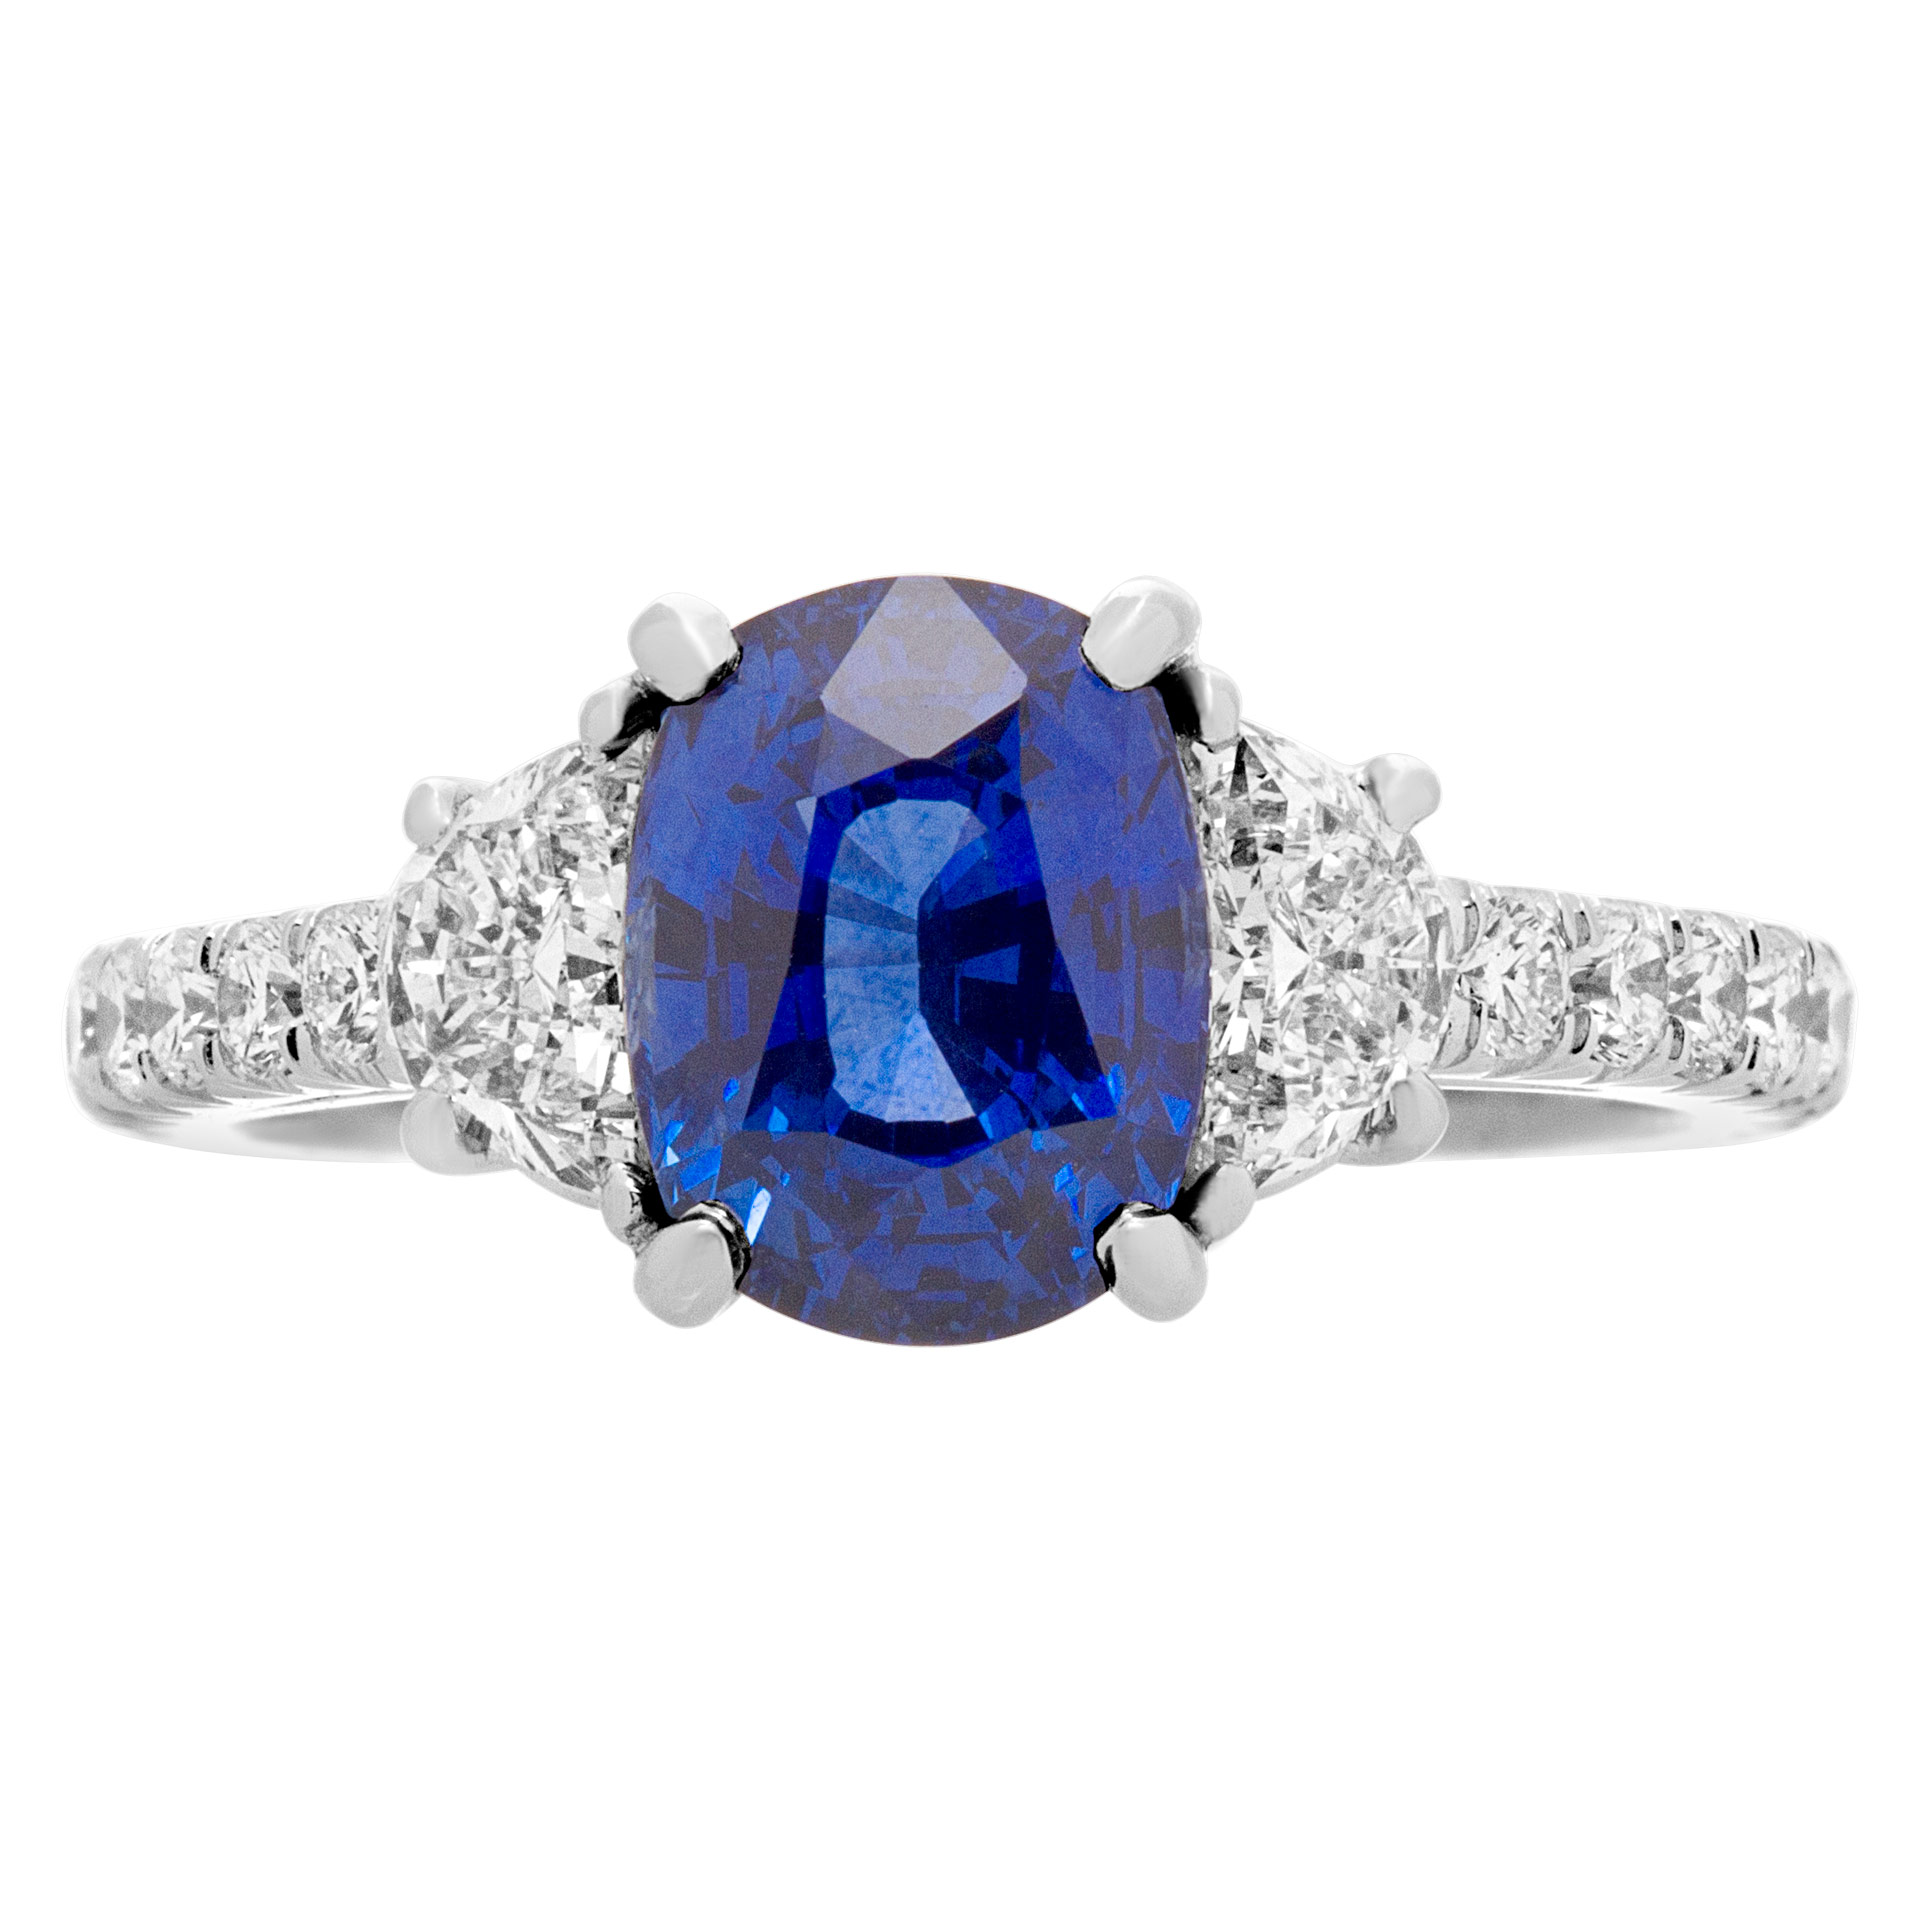 Madagascar deep blue oval-cut sapphire and diamond ring. 3.14 carat sapphire, 0.55 carats diamonds